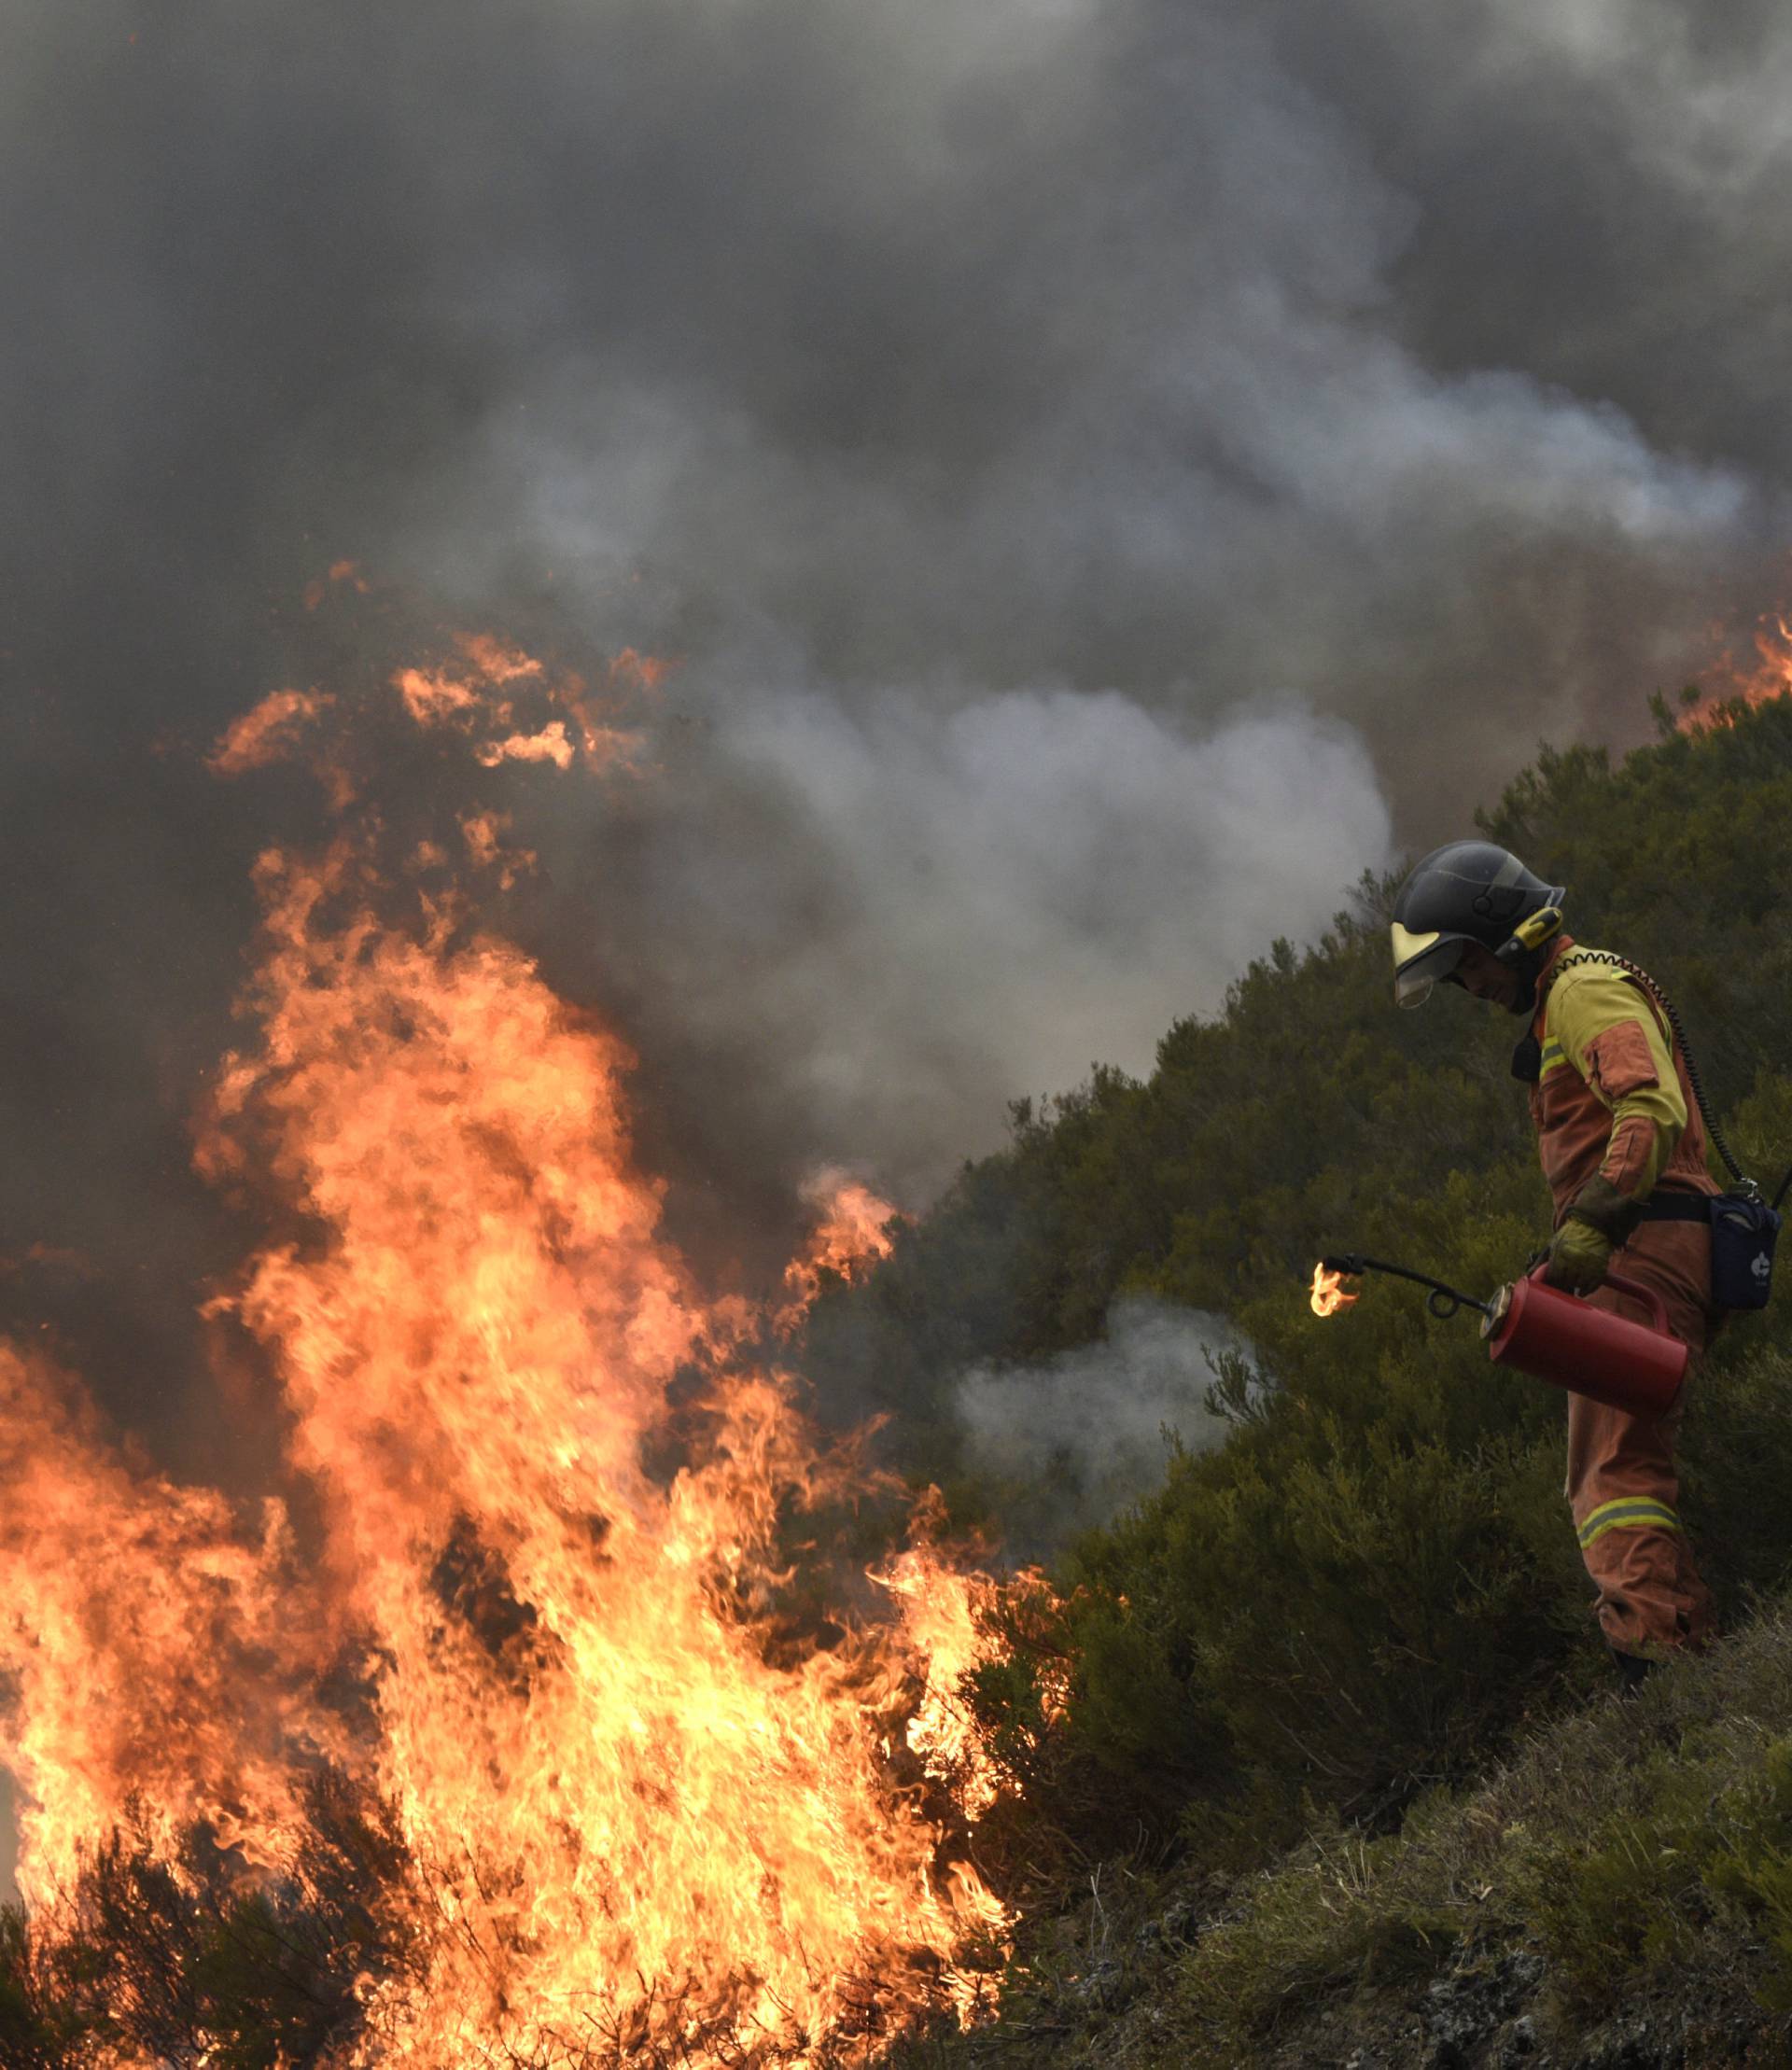 A firefighter builds a firewall in Tablado, near Muniellos park, Asturias